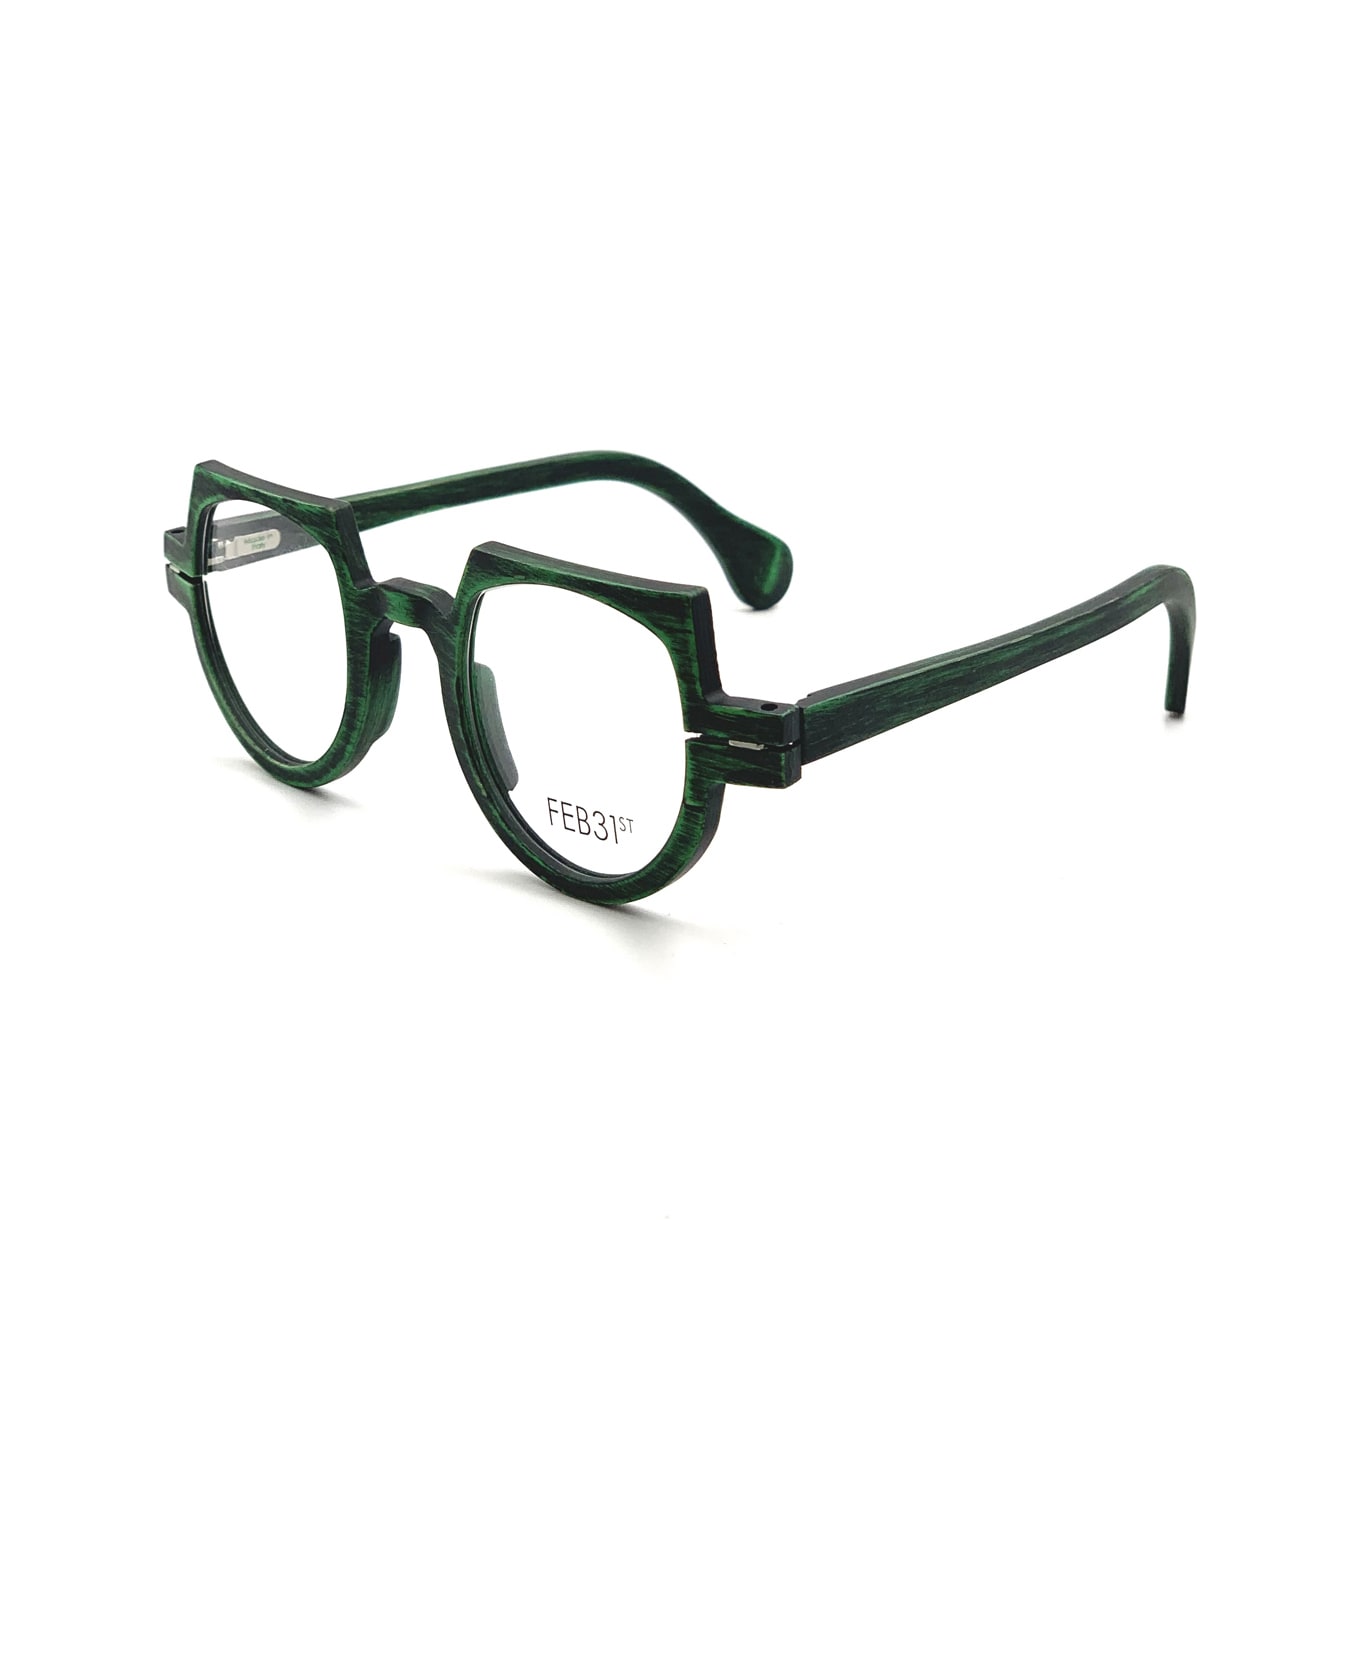 Feb31st Lewis Green Glasses - Verde